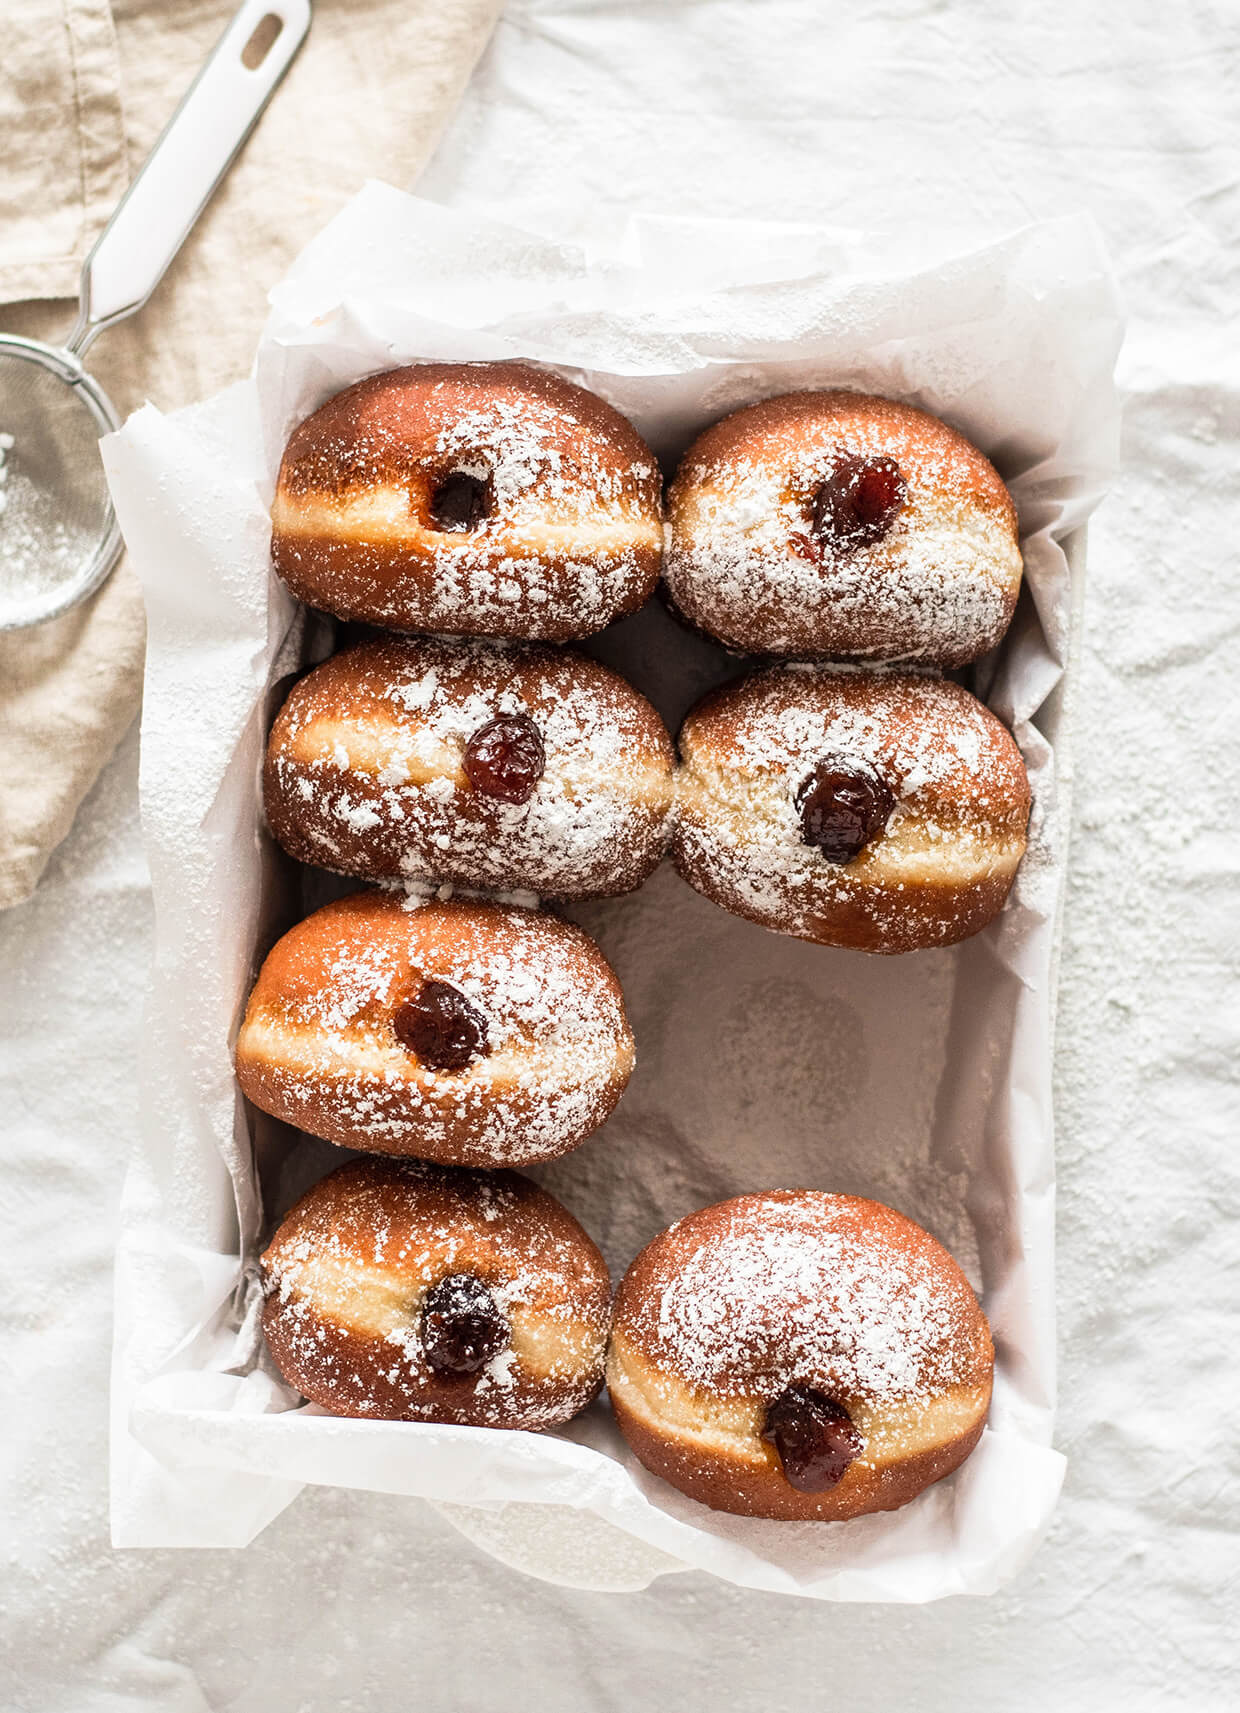 Recipe for strawberry jam vanilla cream doughnuts - learn how to make the best fluffy doughnuts!